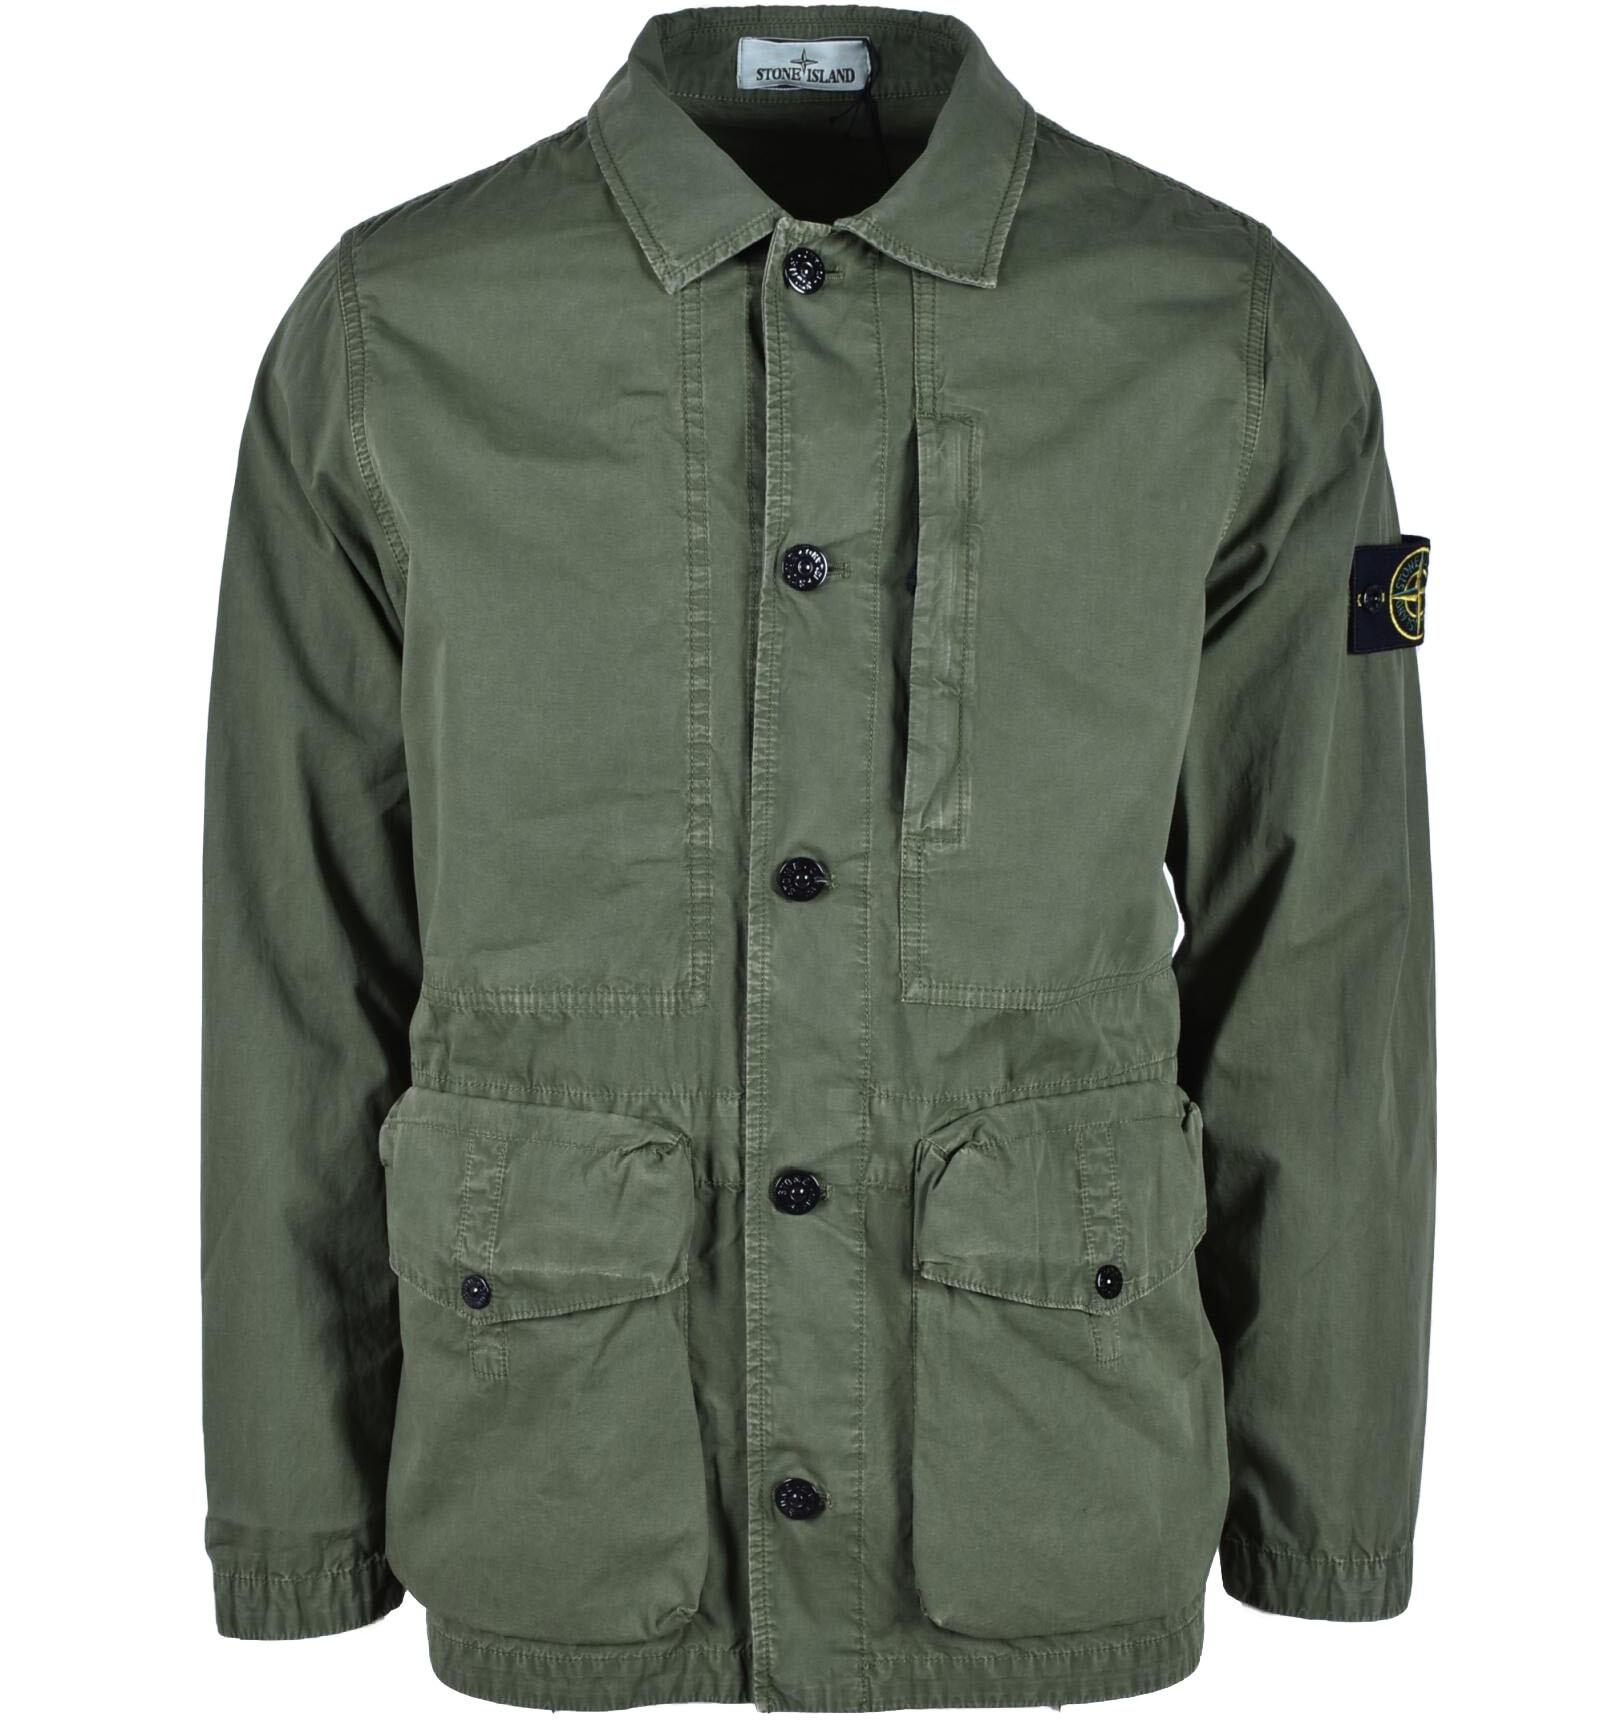 Men's Military Green Jacket